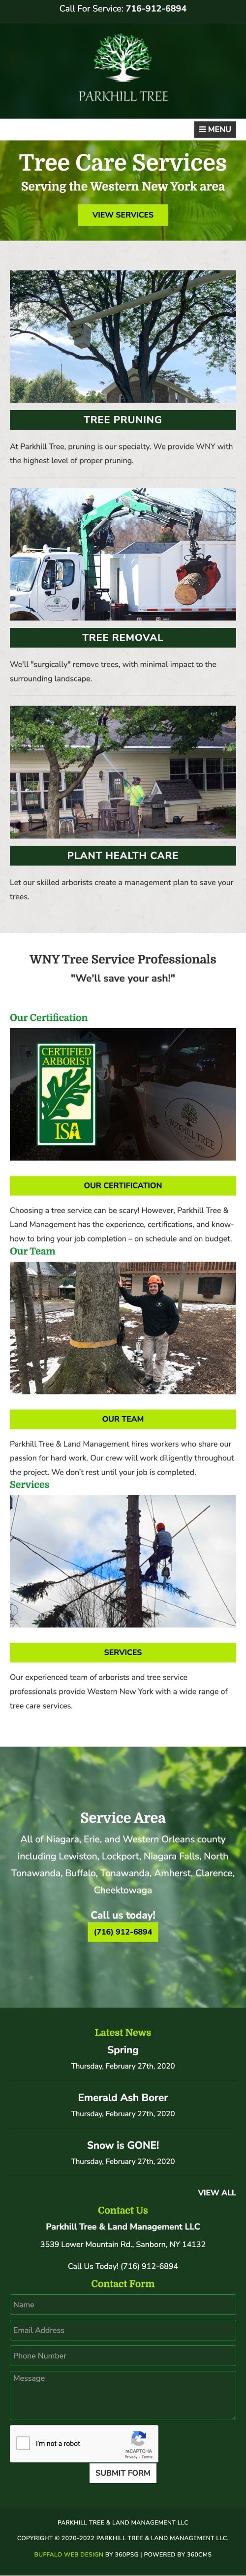 Parkhill Tree & Land Management Website - Mobile